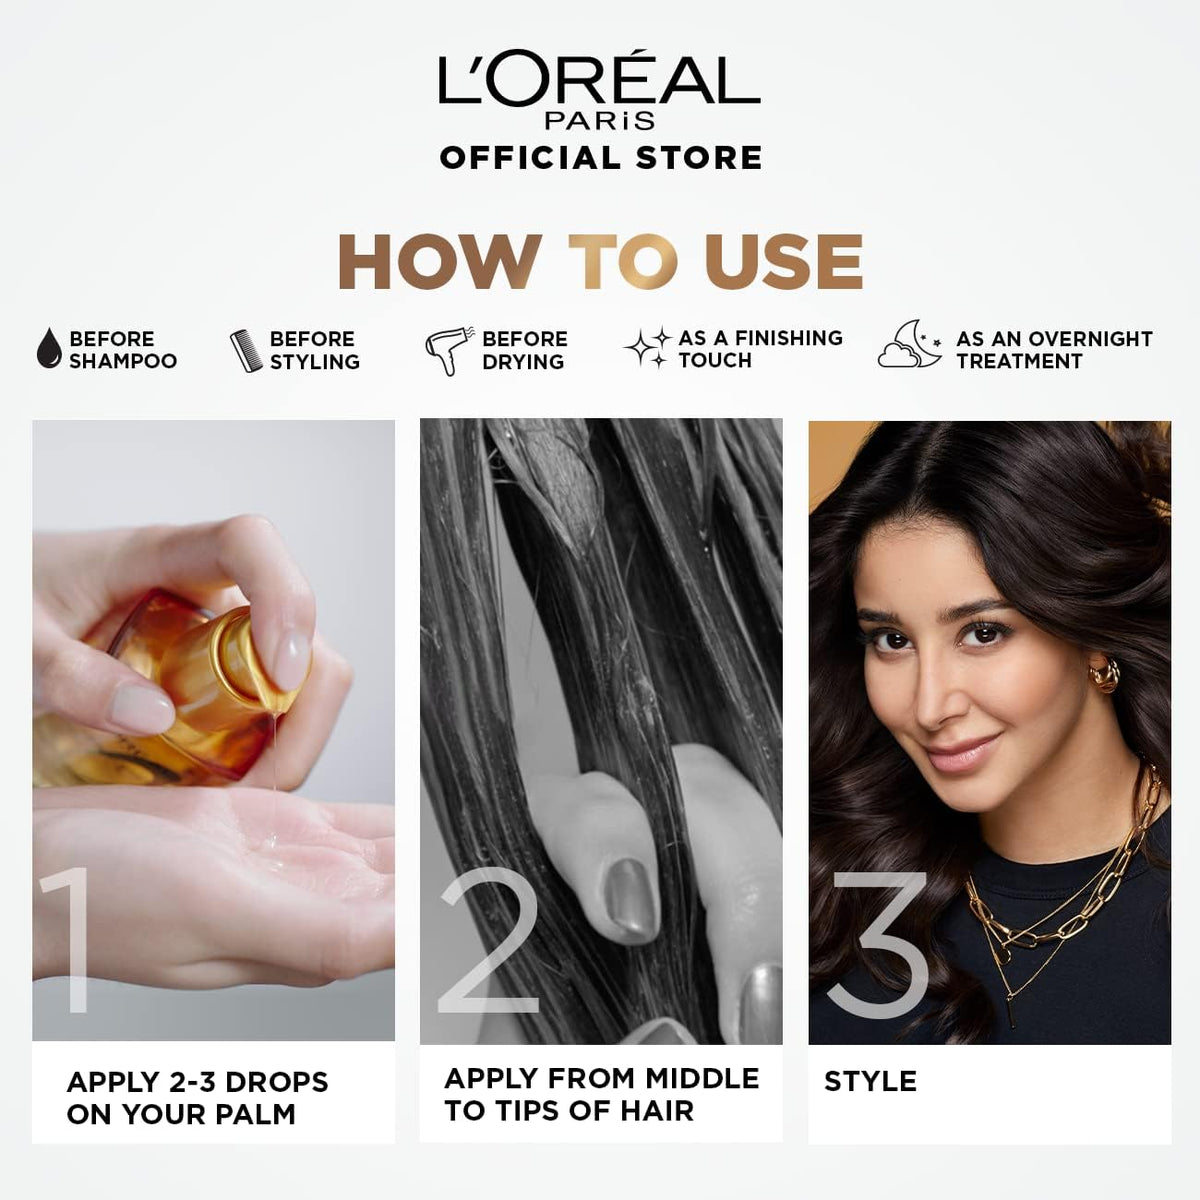 L'Oréal Paris Elvive Extraordinary Oil Serum For Dry Hair, 100 ml, Gold